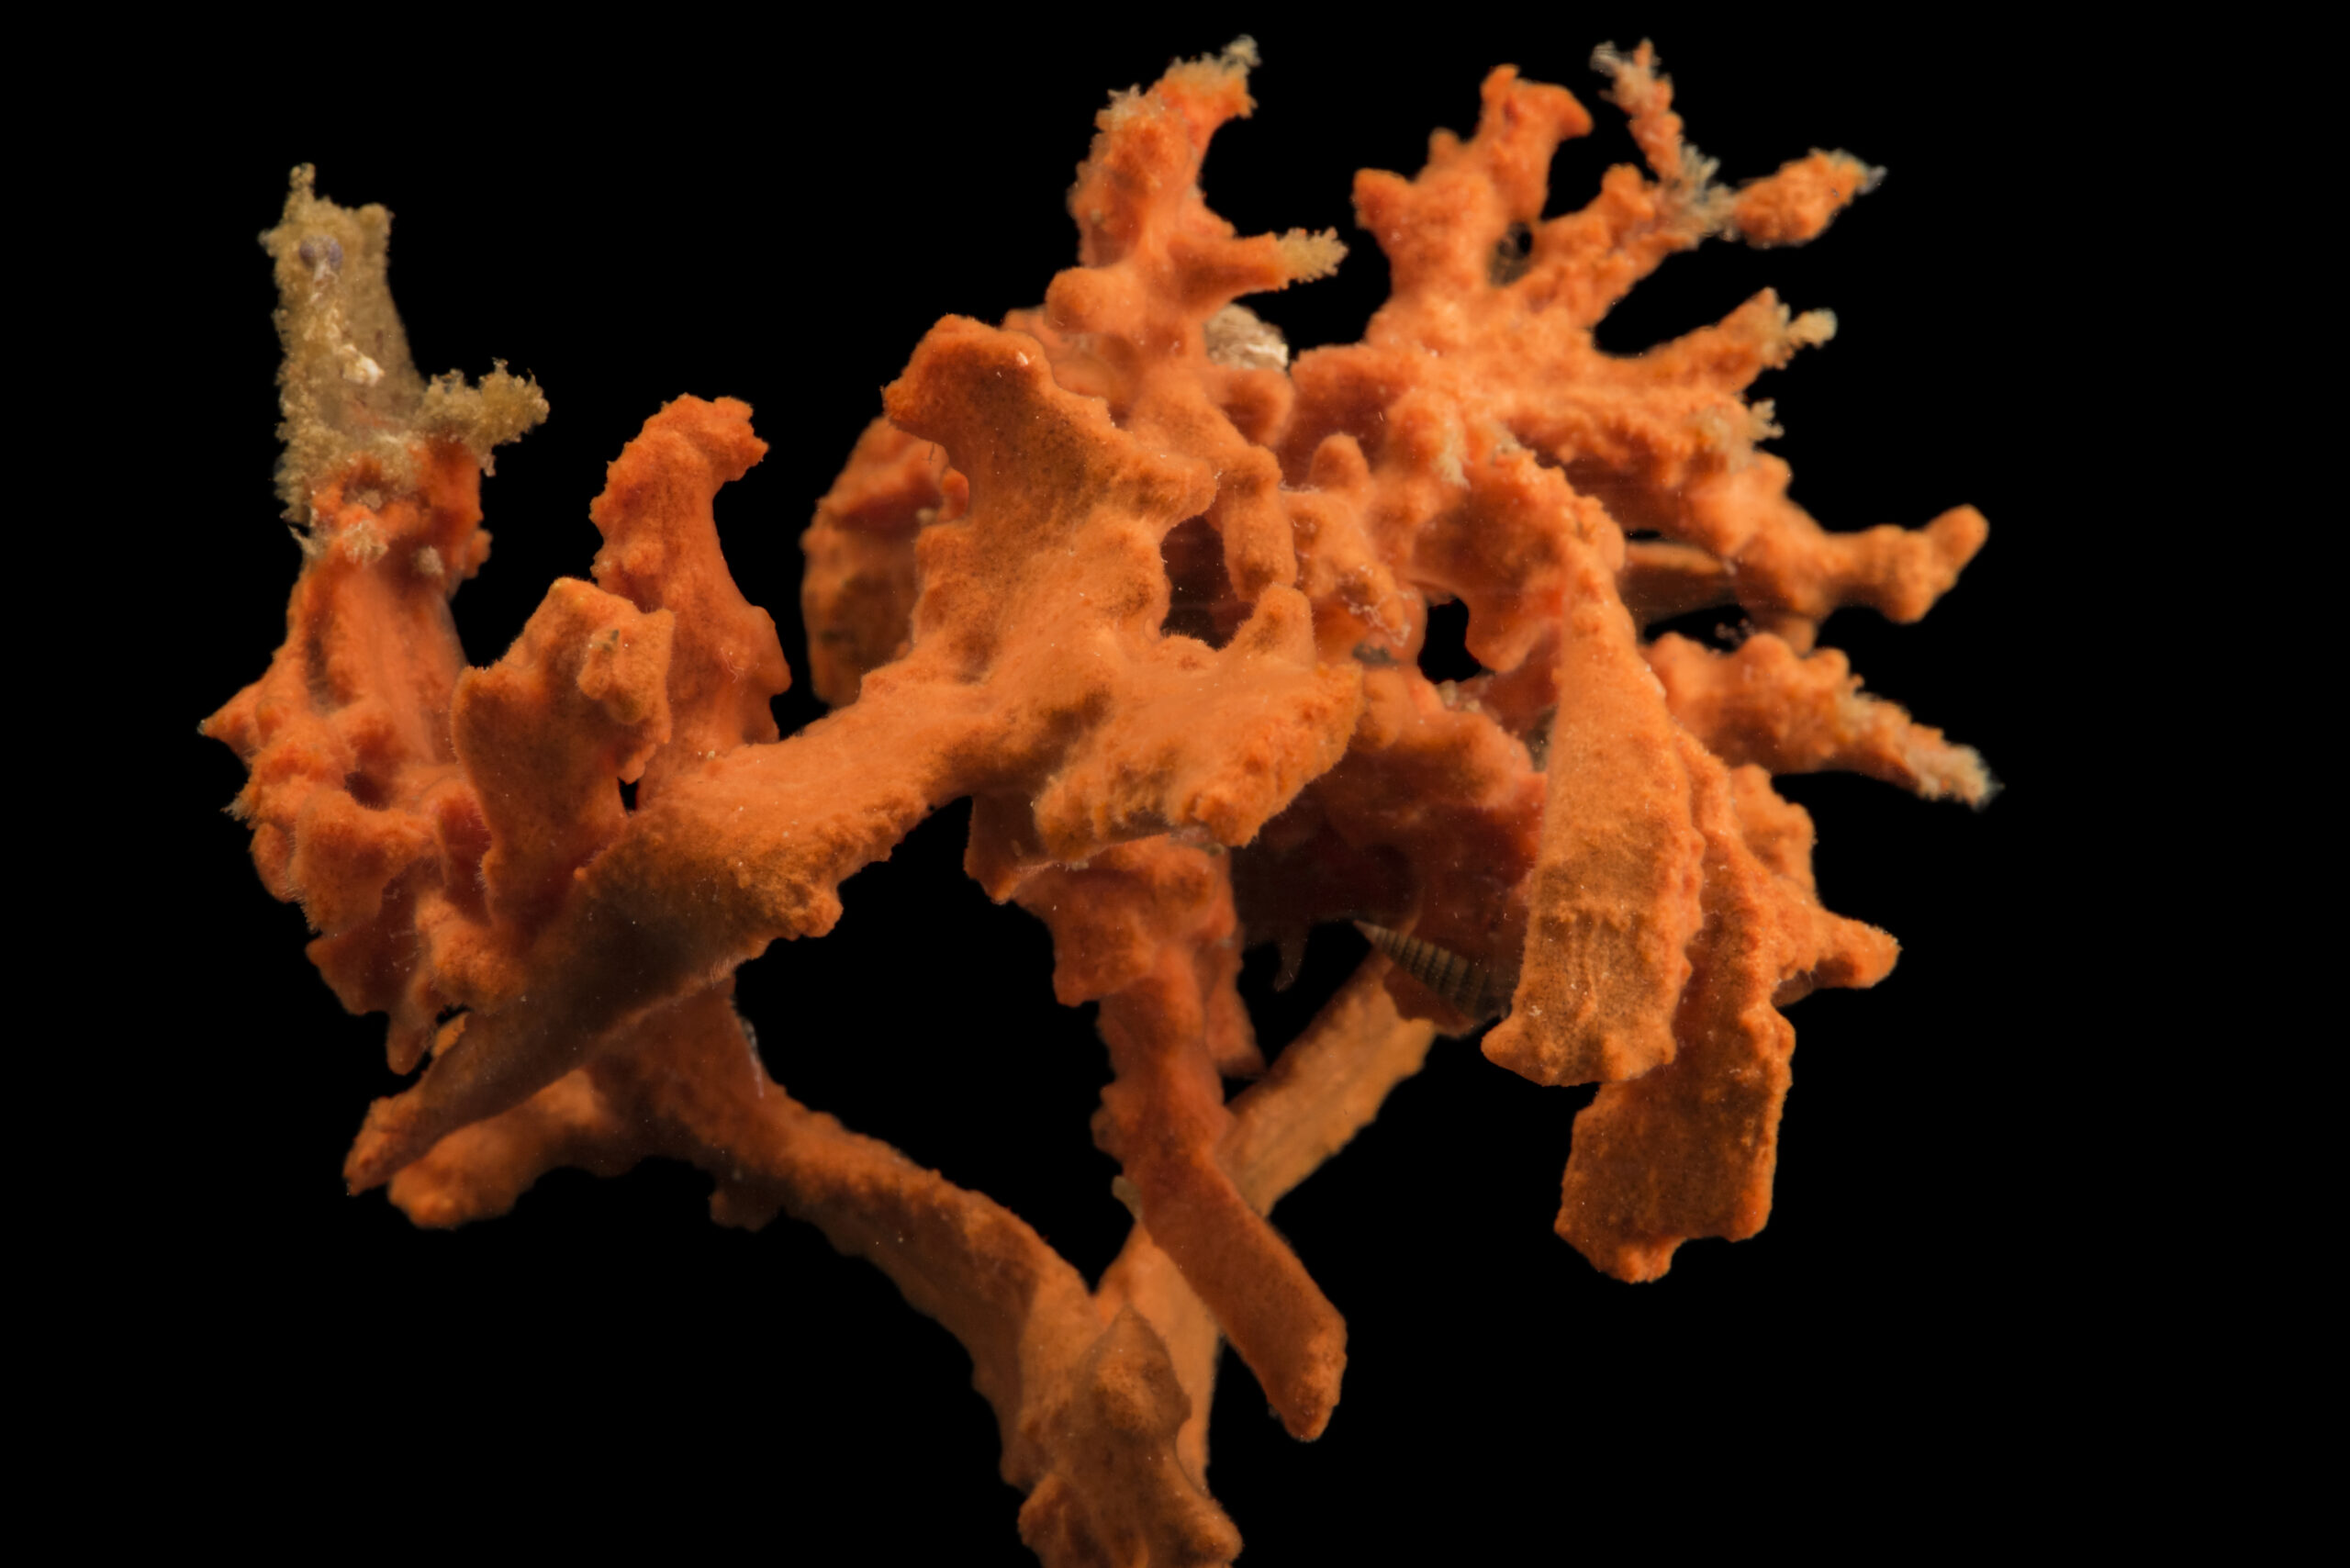 Red beard sponge (Microciona prolifera)